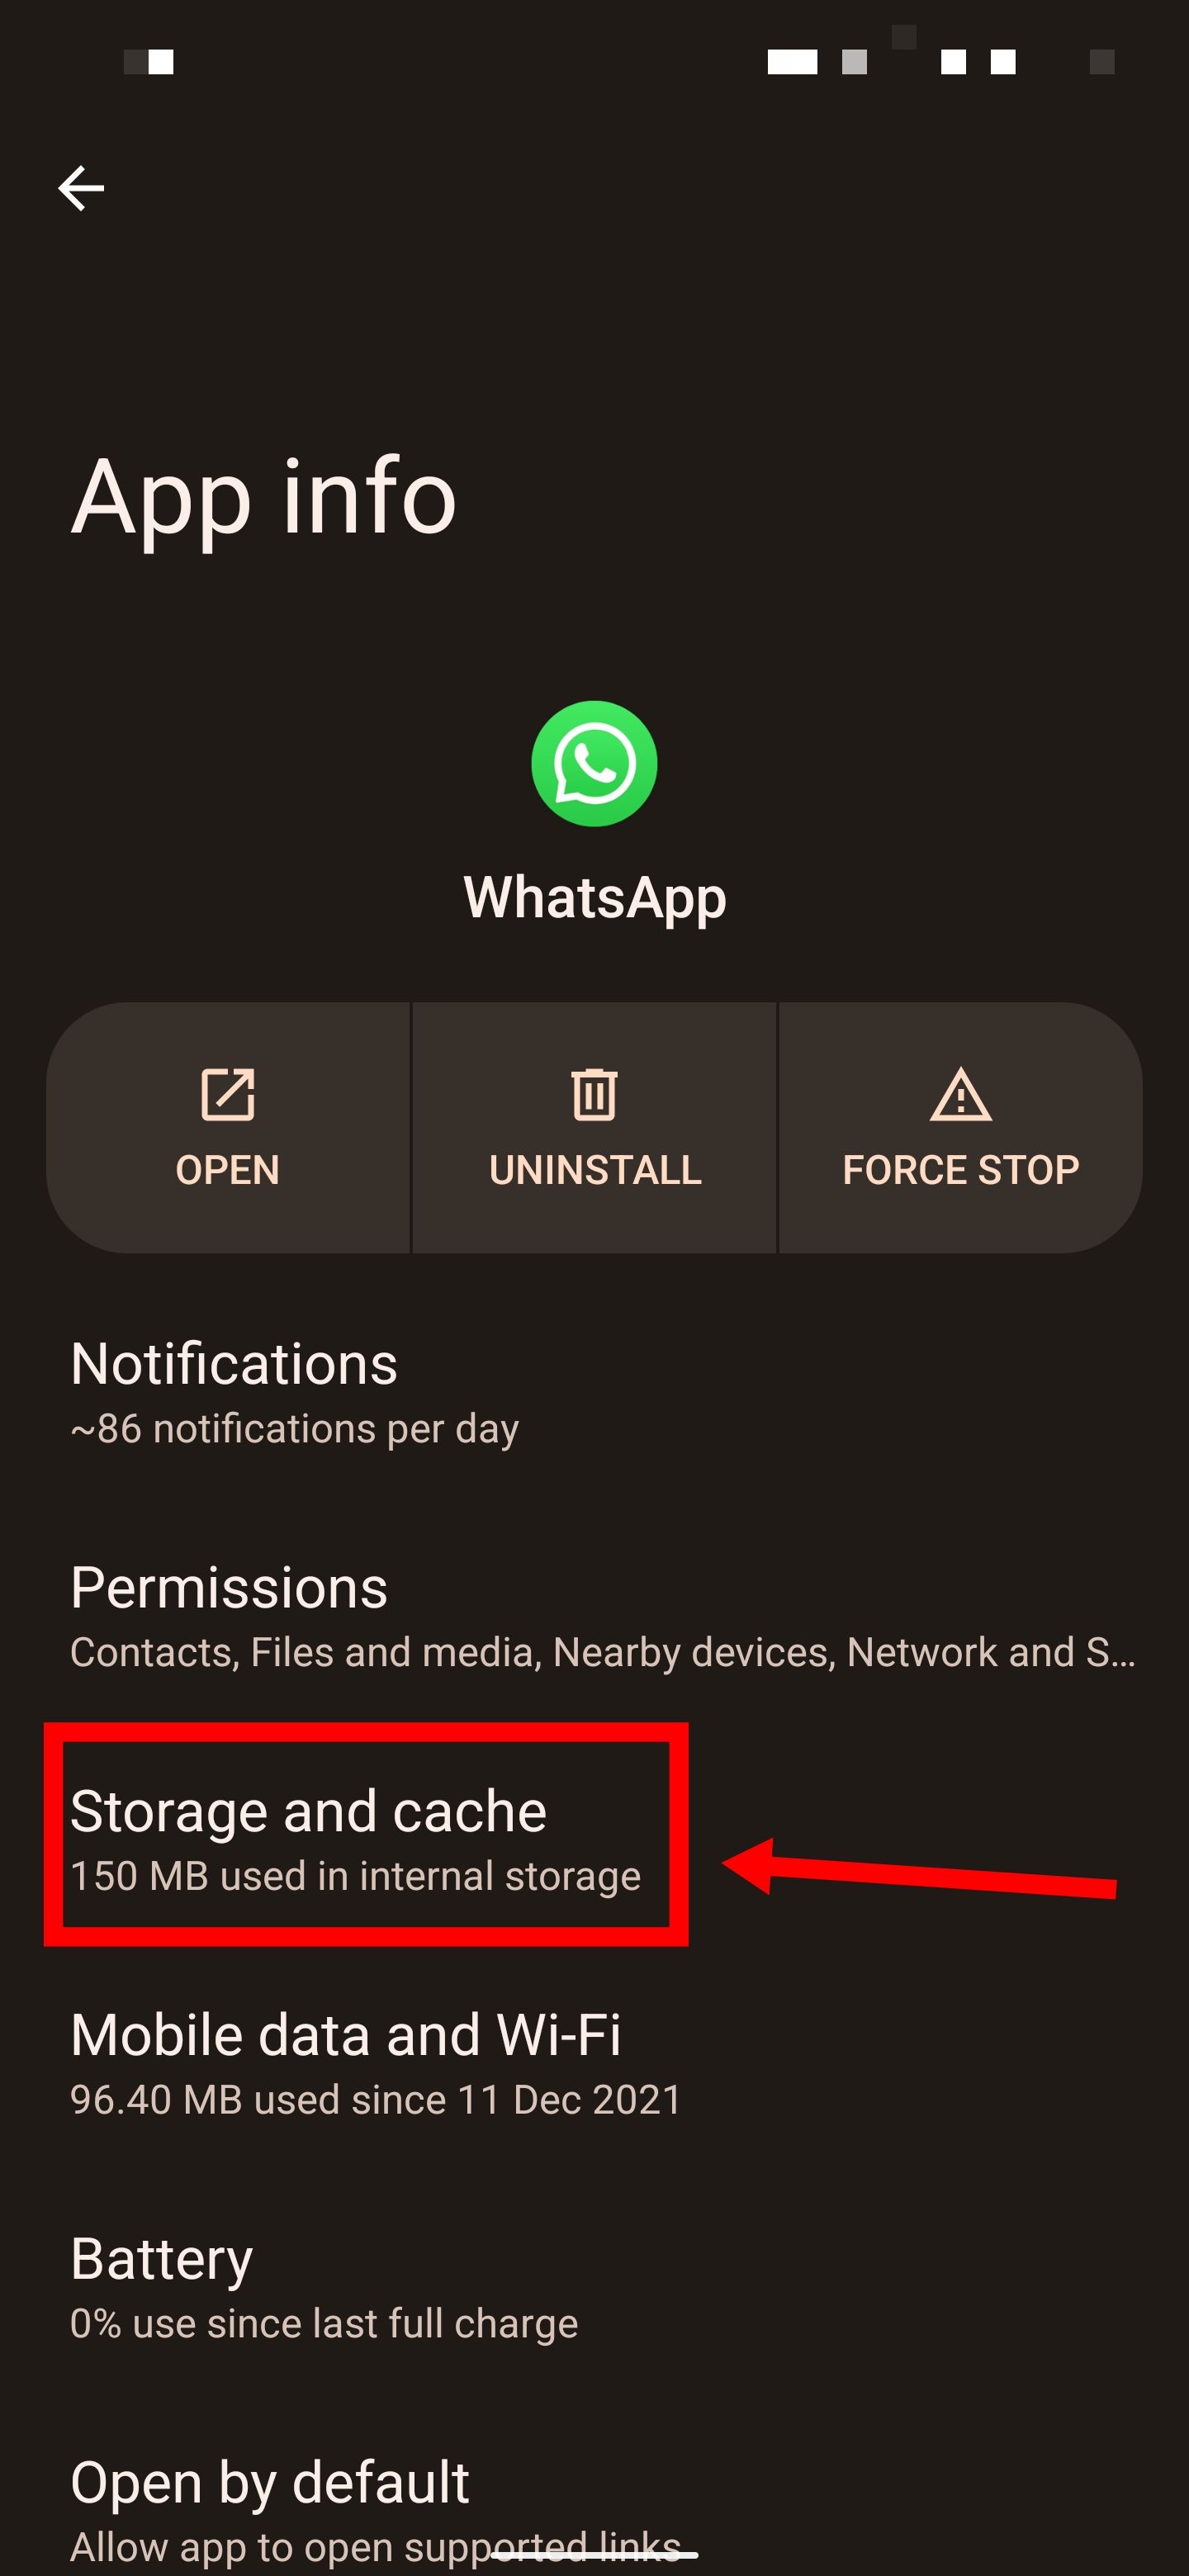 whatsapp storage and cache options